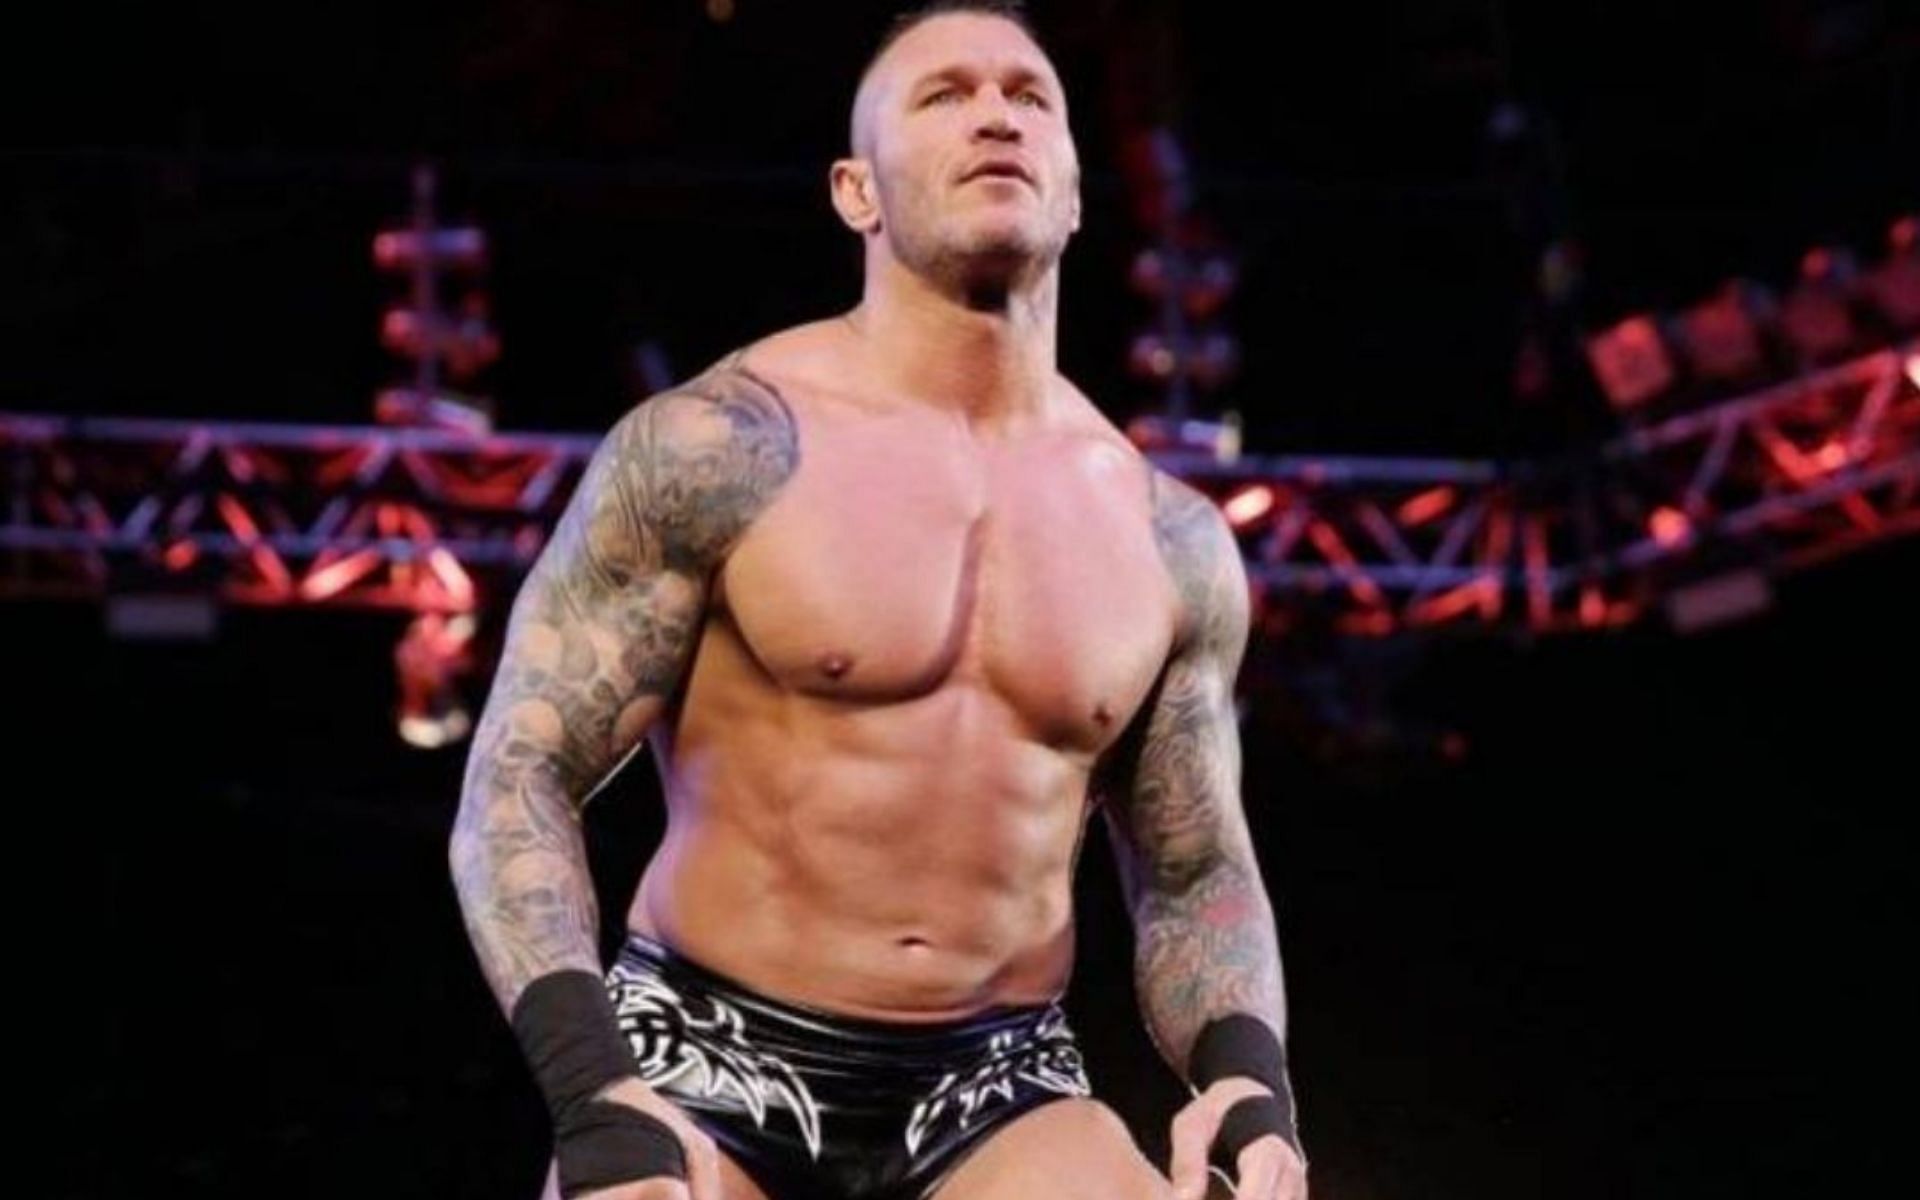 14-time world champion Randy Orton